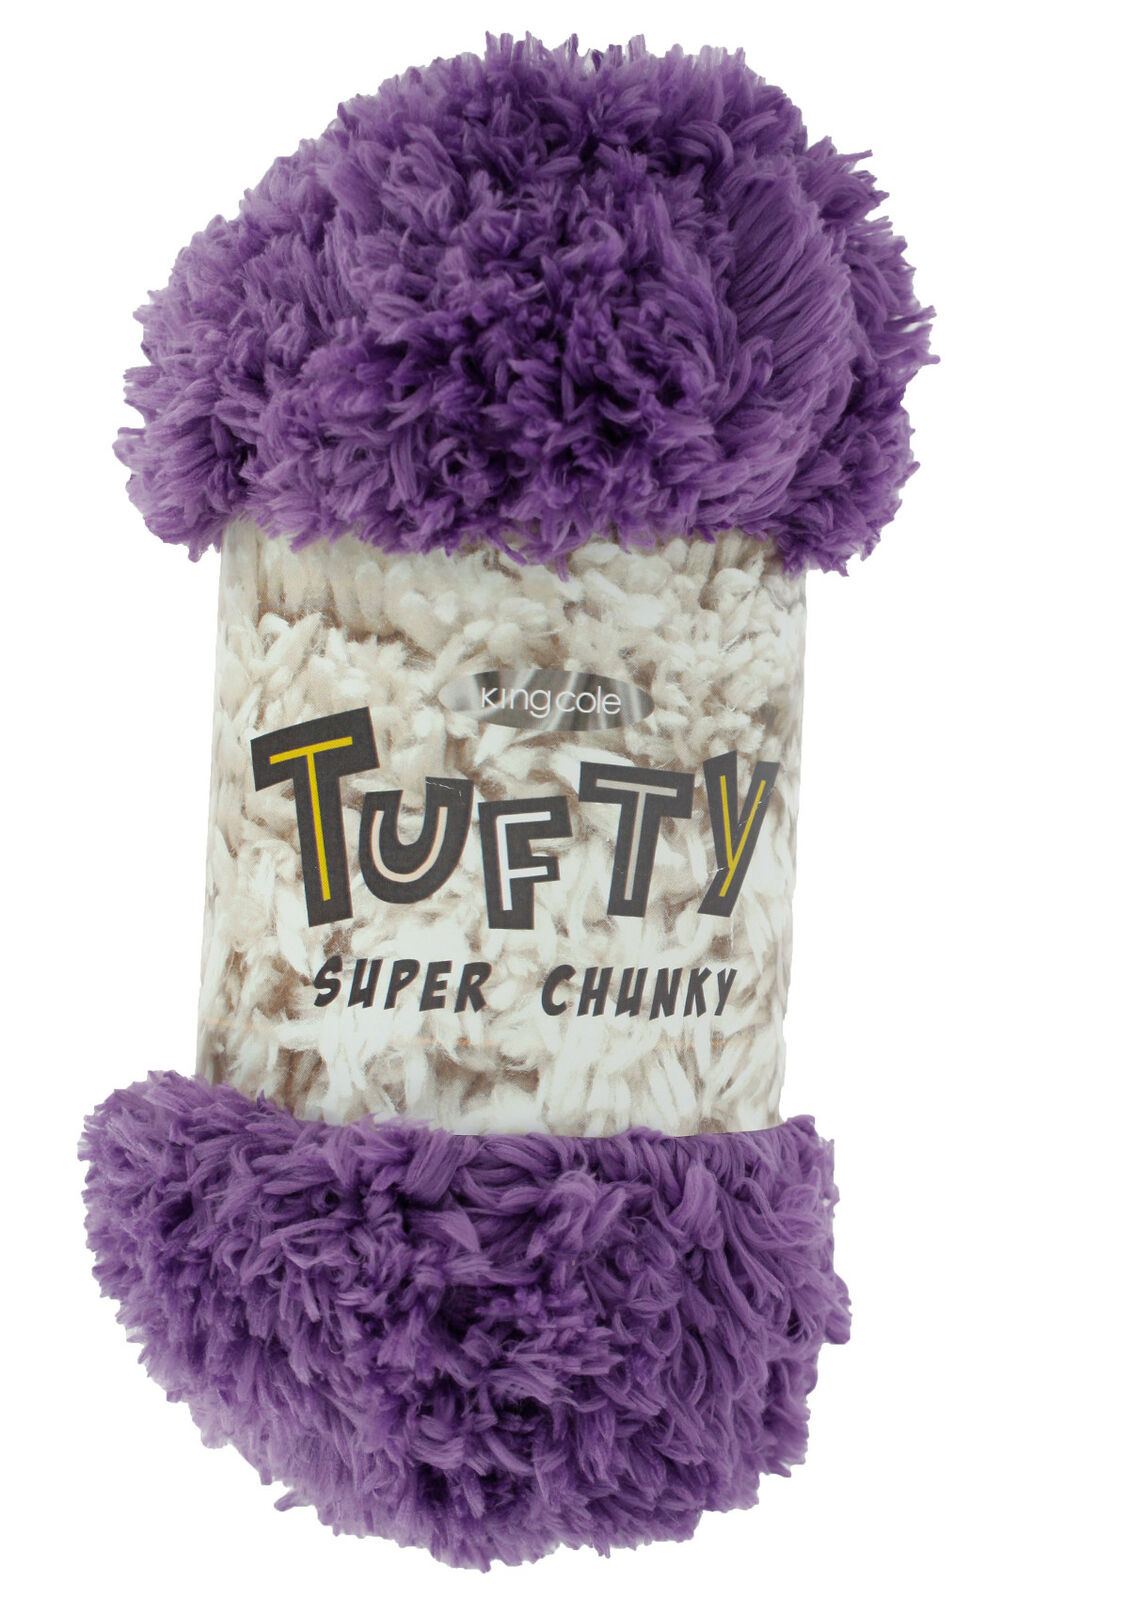 Tufty Super Chunky 1 2 or 4 200g Balls 100% Polyester Soft Fleecy King Cole Yarn 